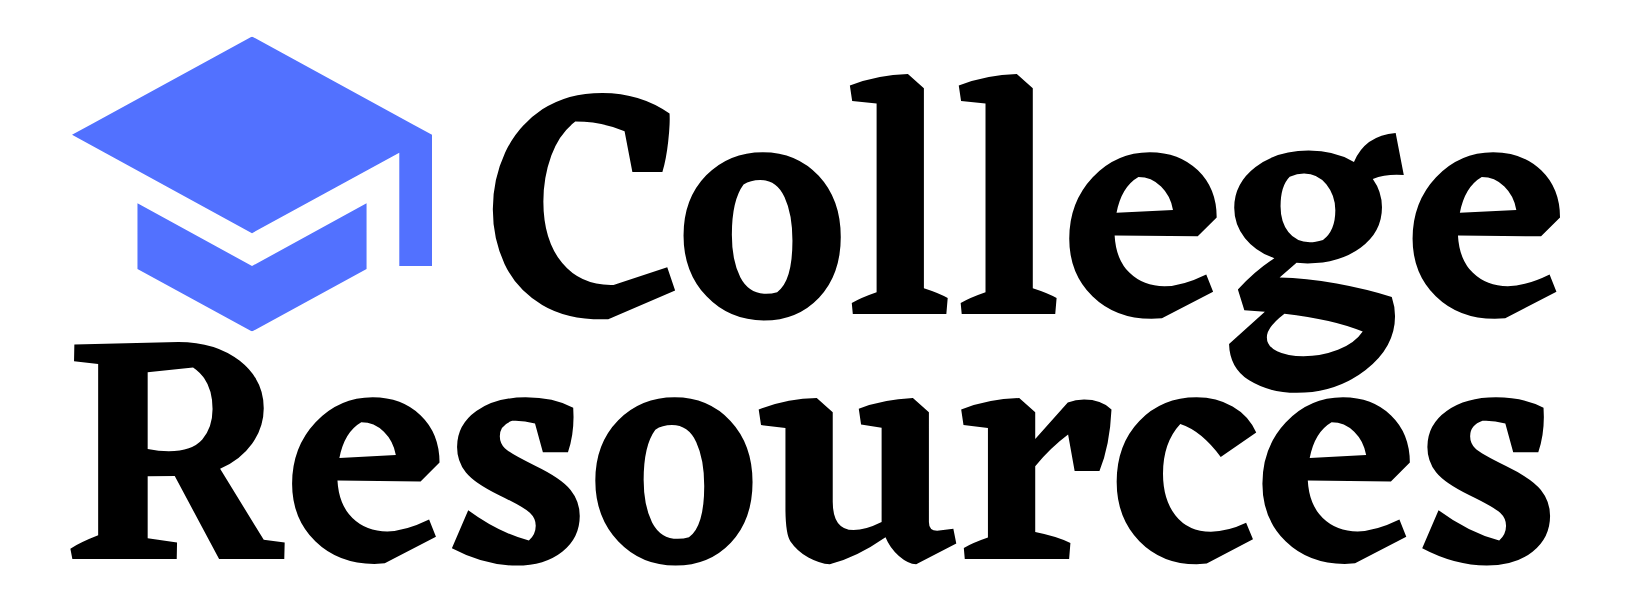 College Resources banner